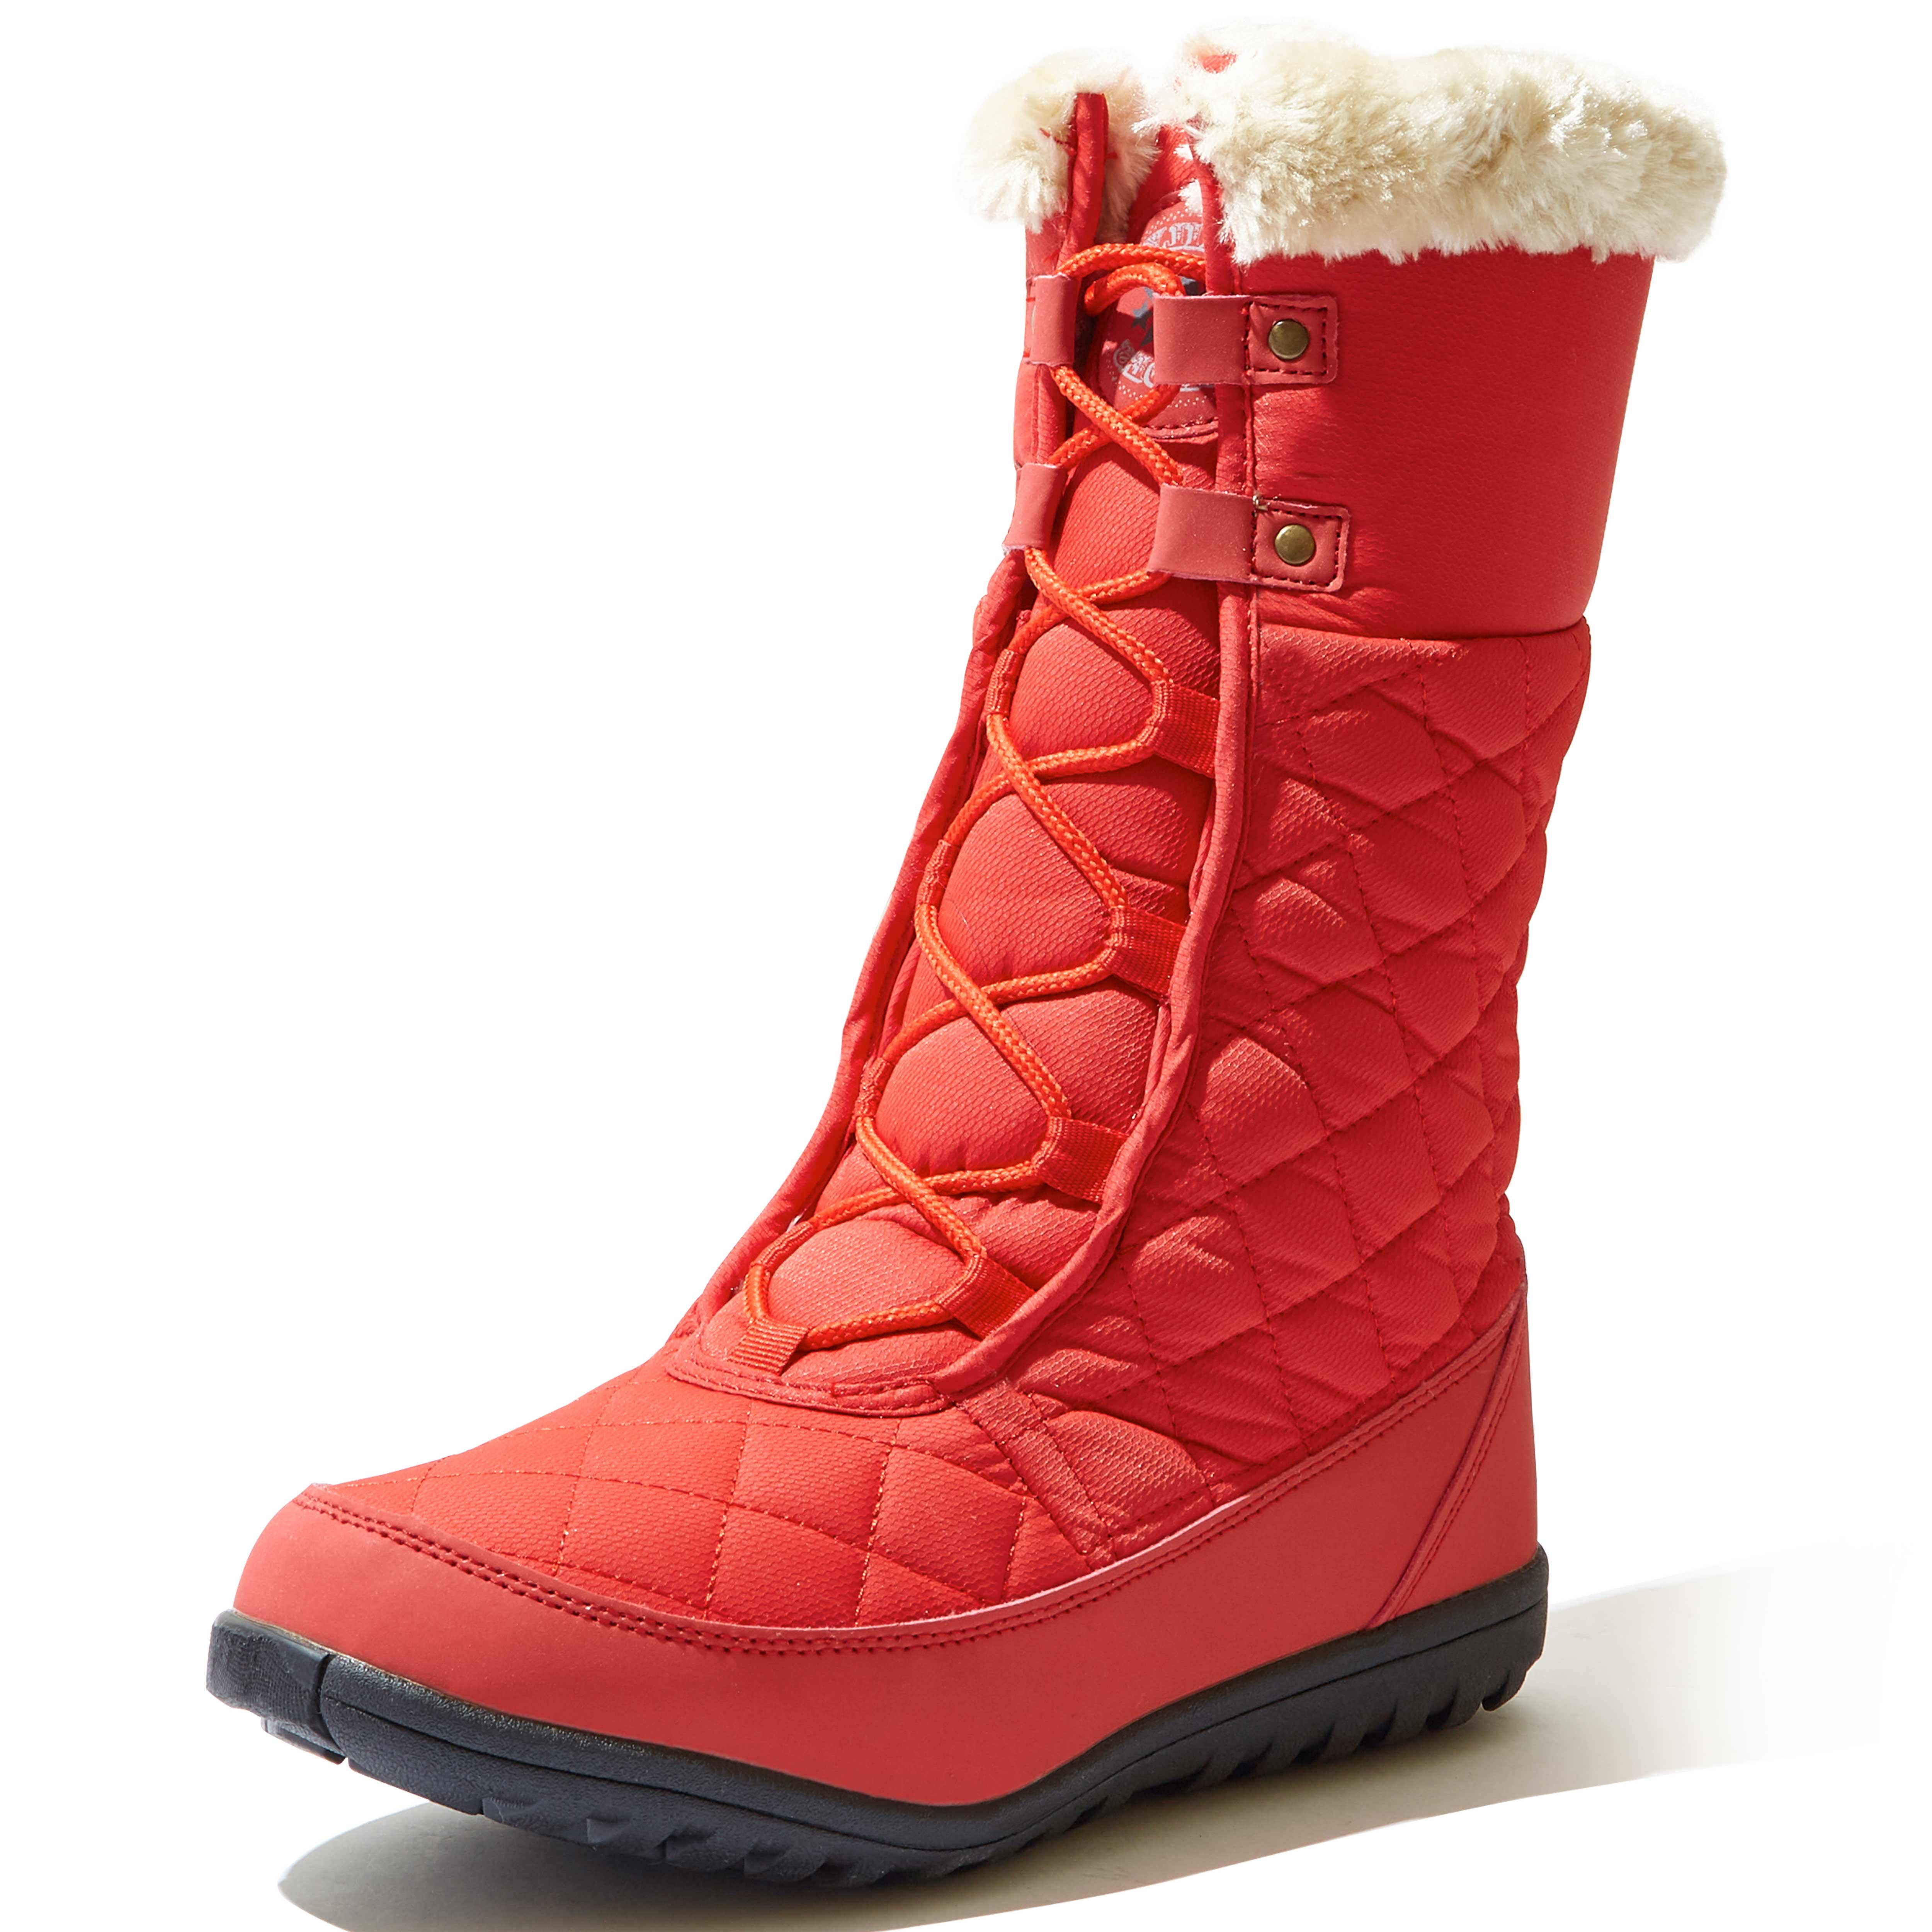 Buy > sale winter boots women's > in stock